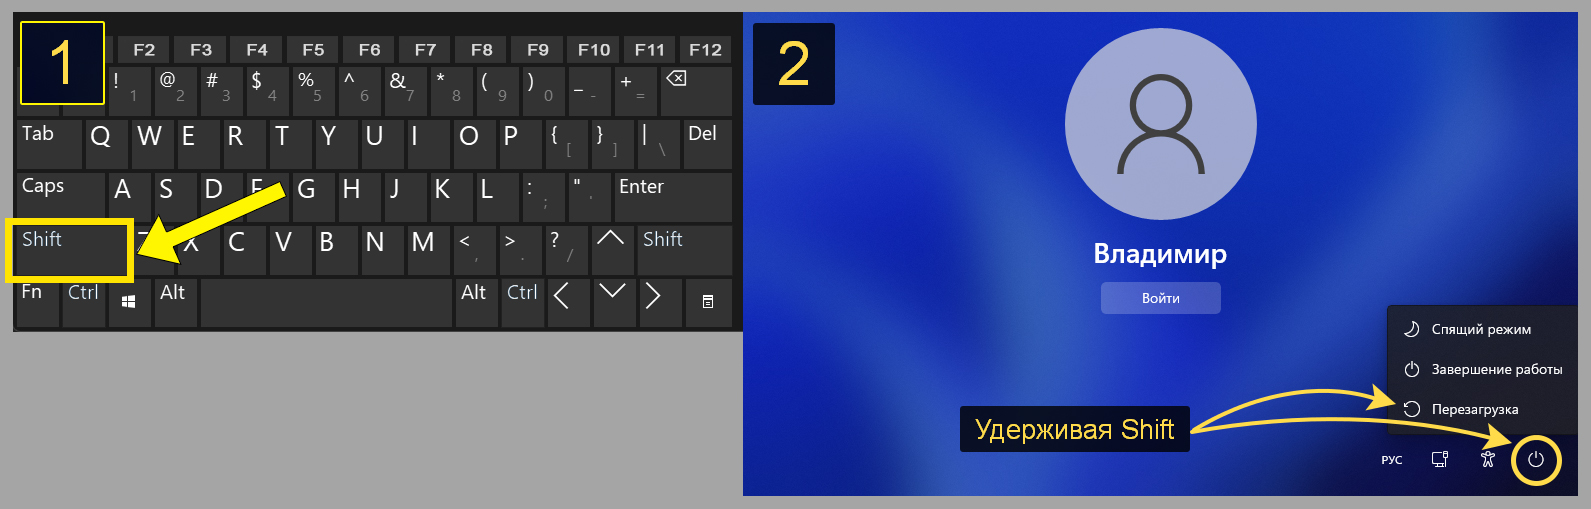 Клавиатура, клавиша Shift, перезагрузка Win 11 на экране входа в систему.